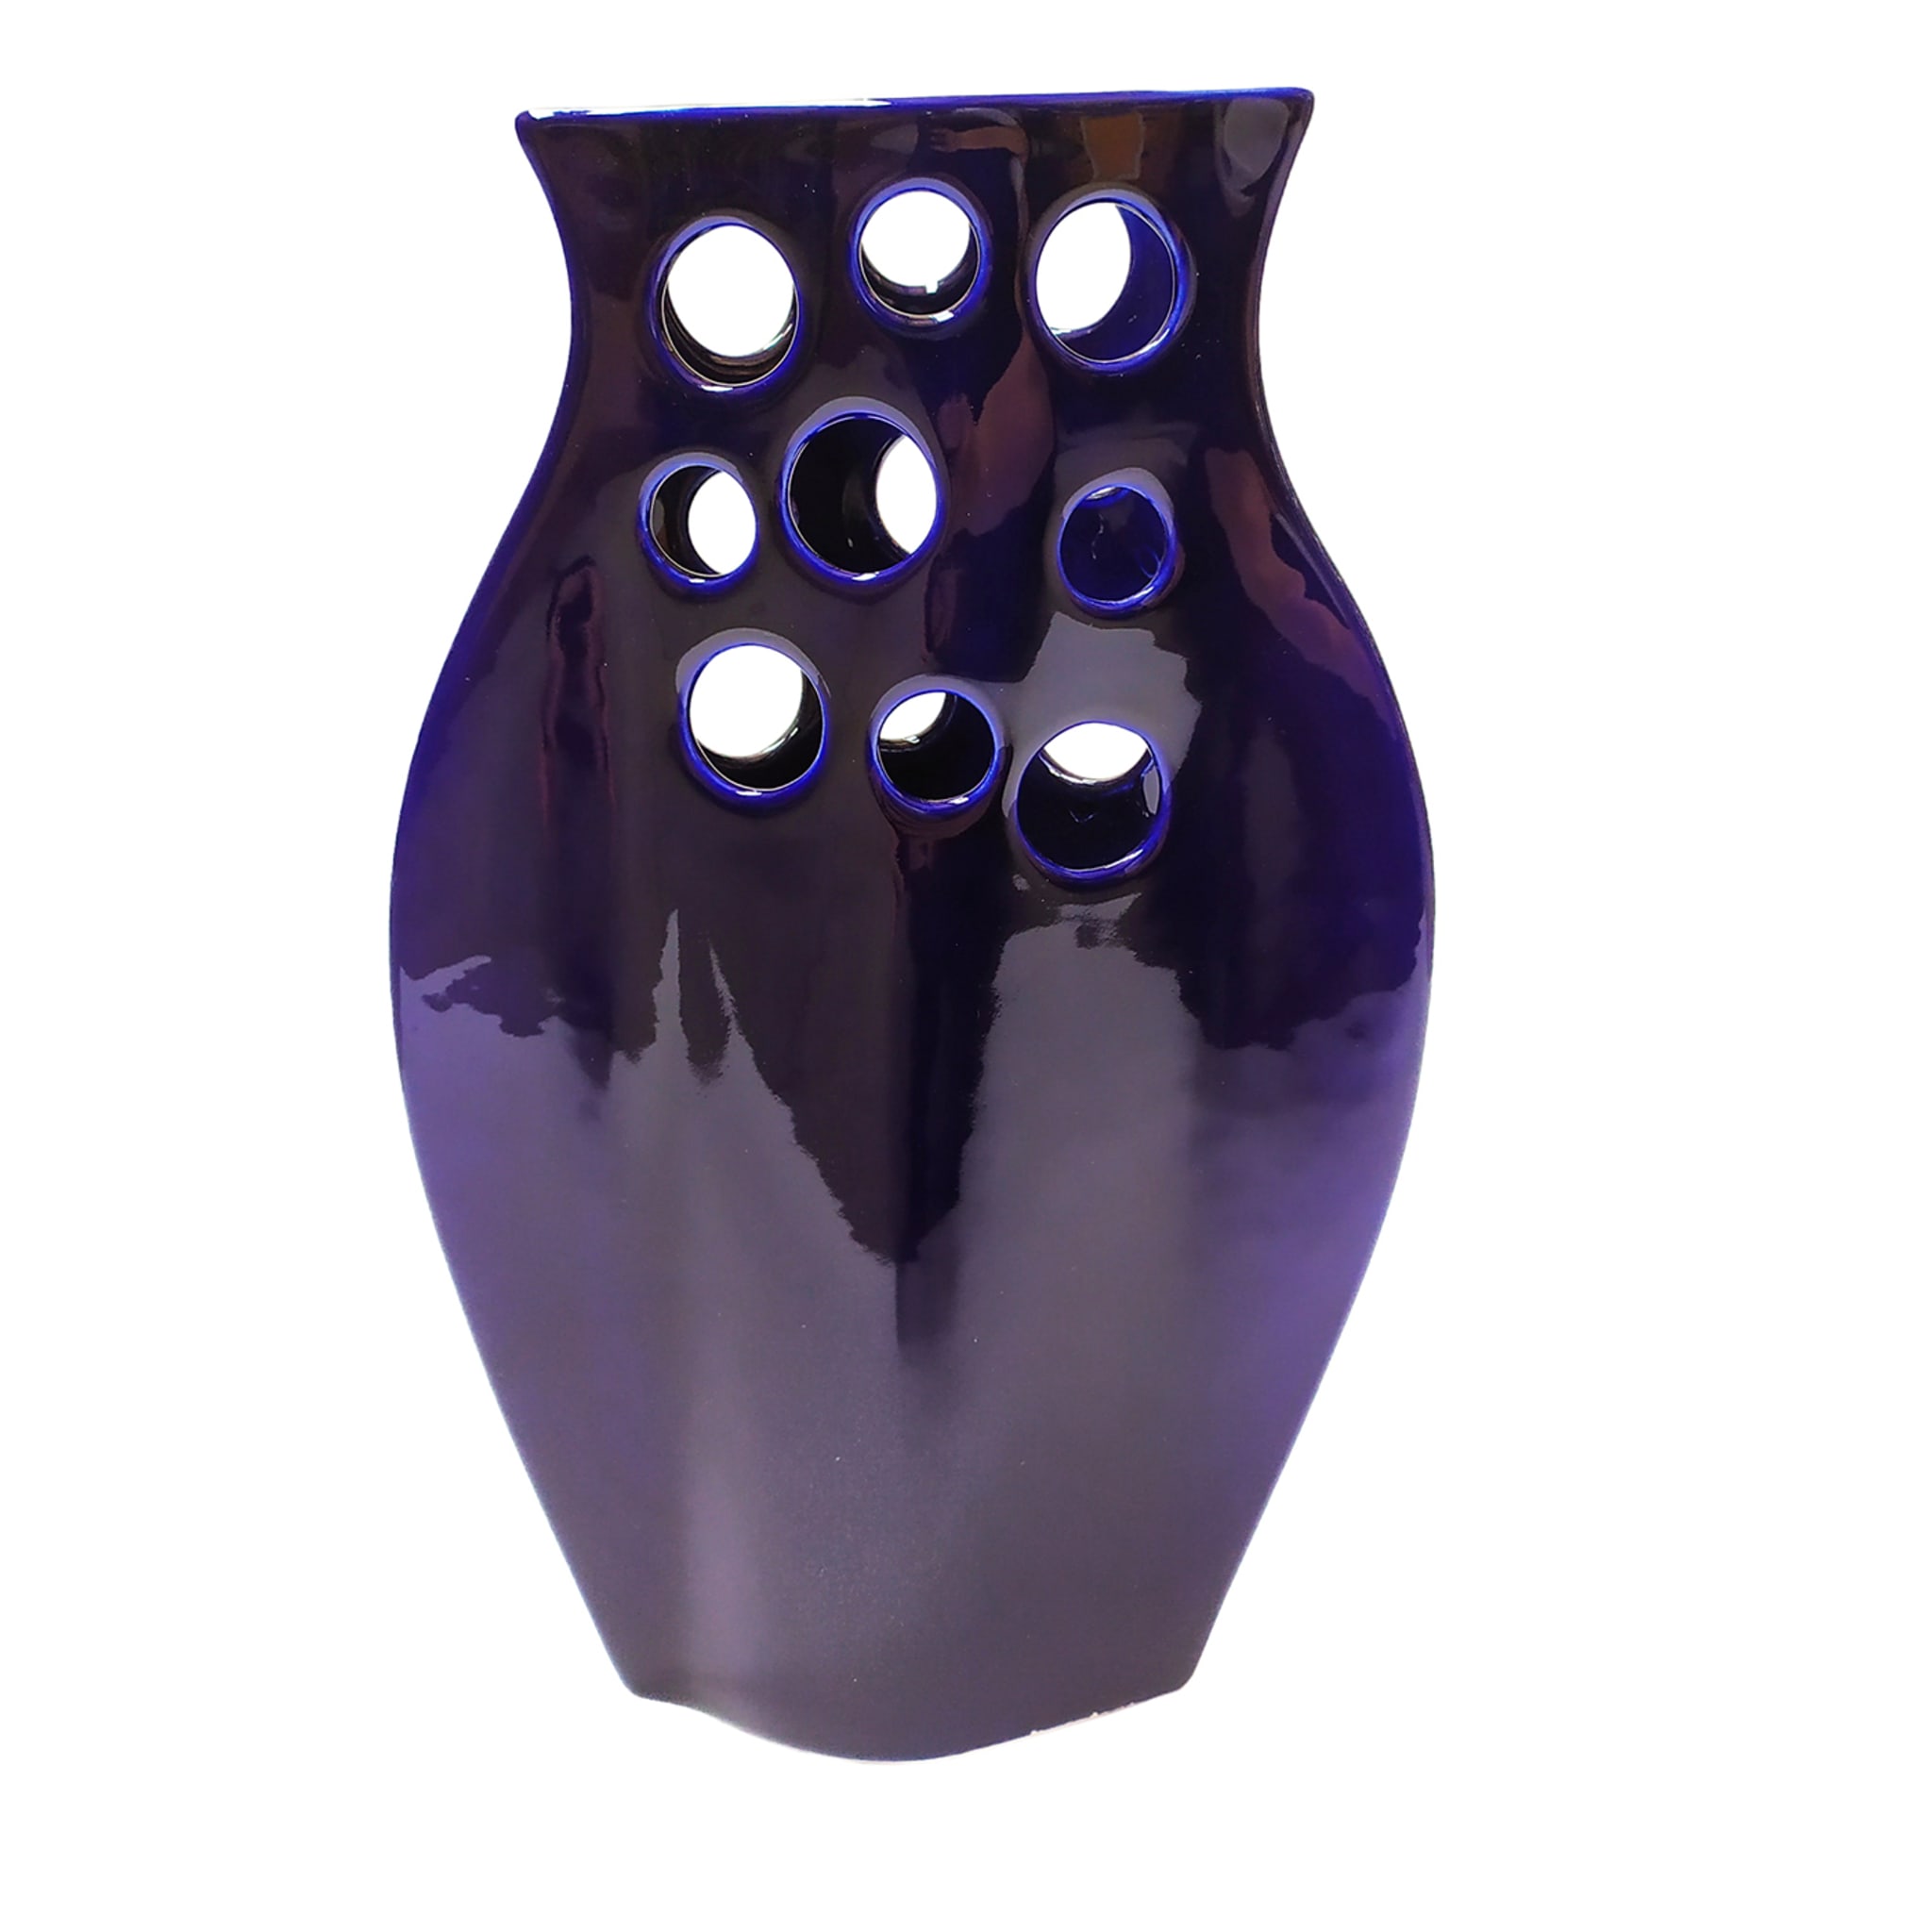 Schiacciati Glossy Blue Vase #2 - Main view